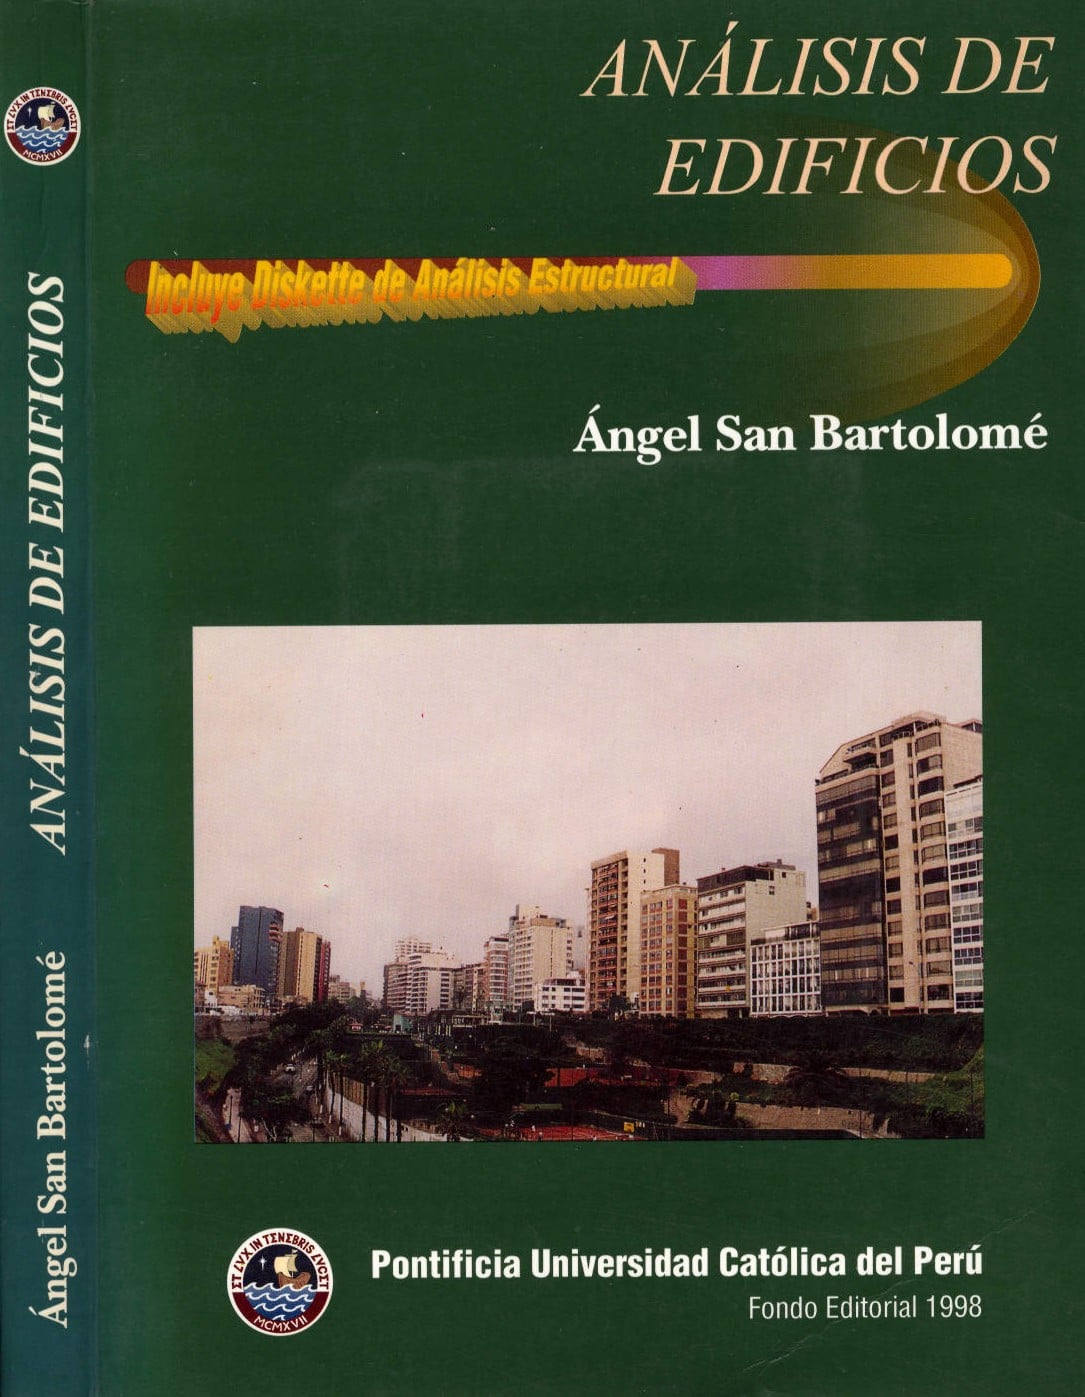 Análisis de Edificios 1 Edición Ángel San Bartolomé PDF